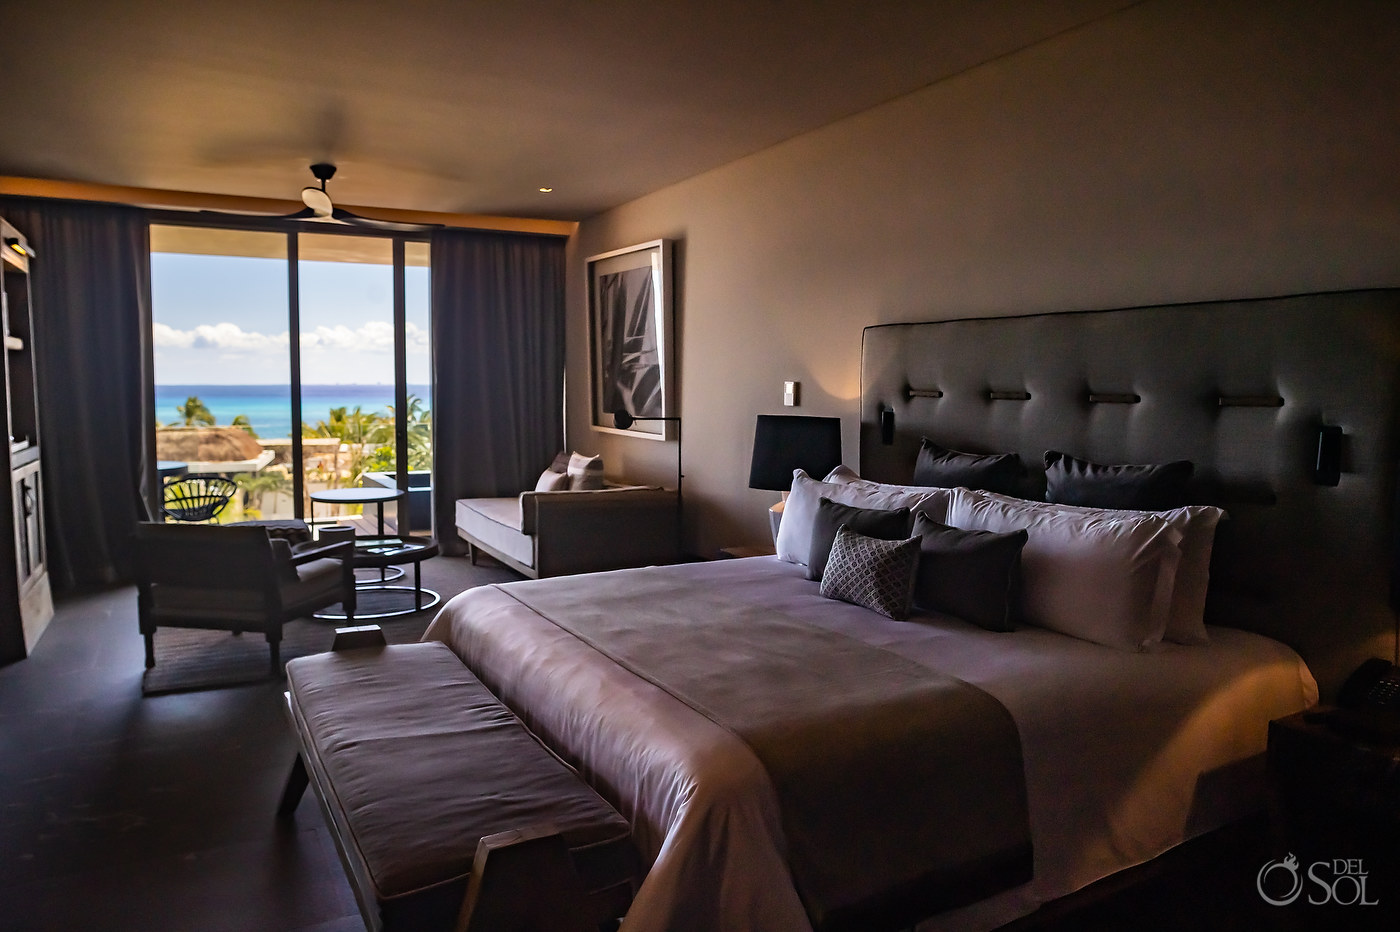 Secrets Moxche suite with ocean view Playa del Carmen